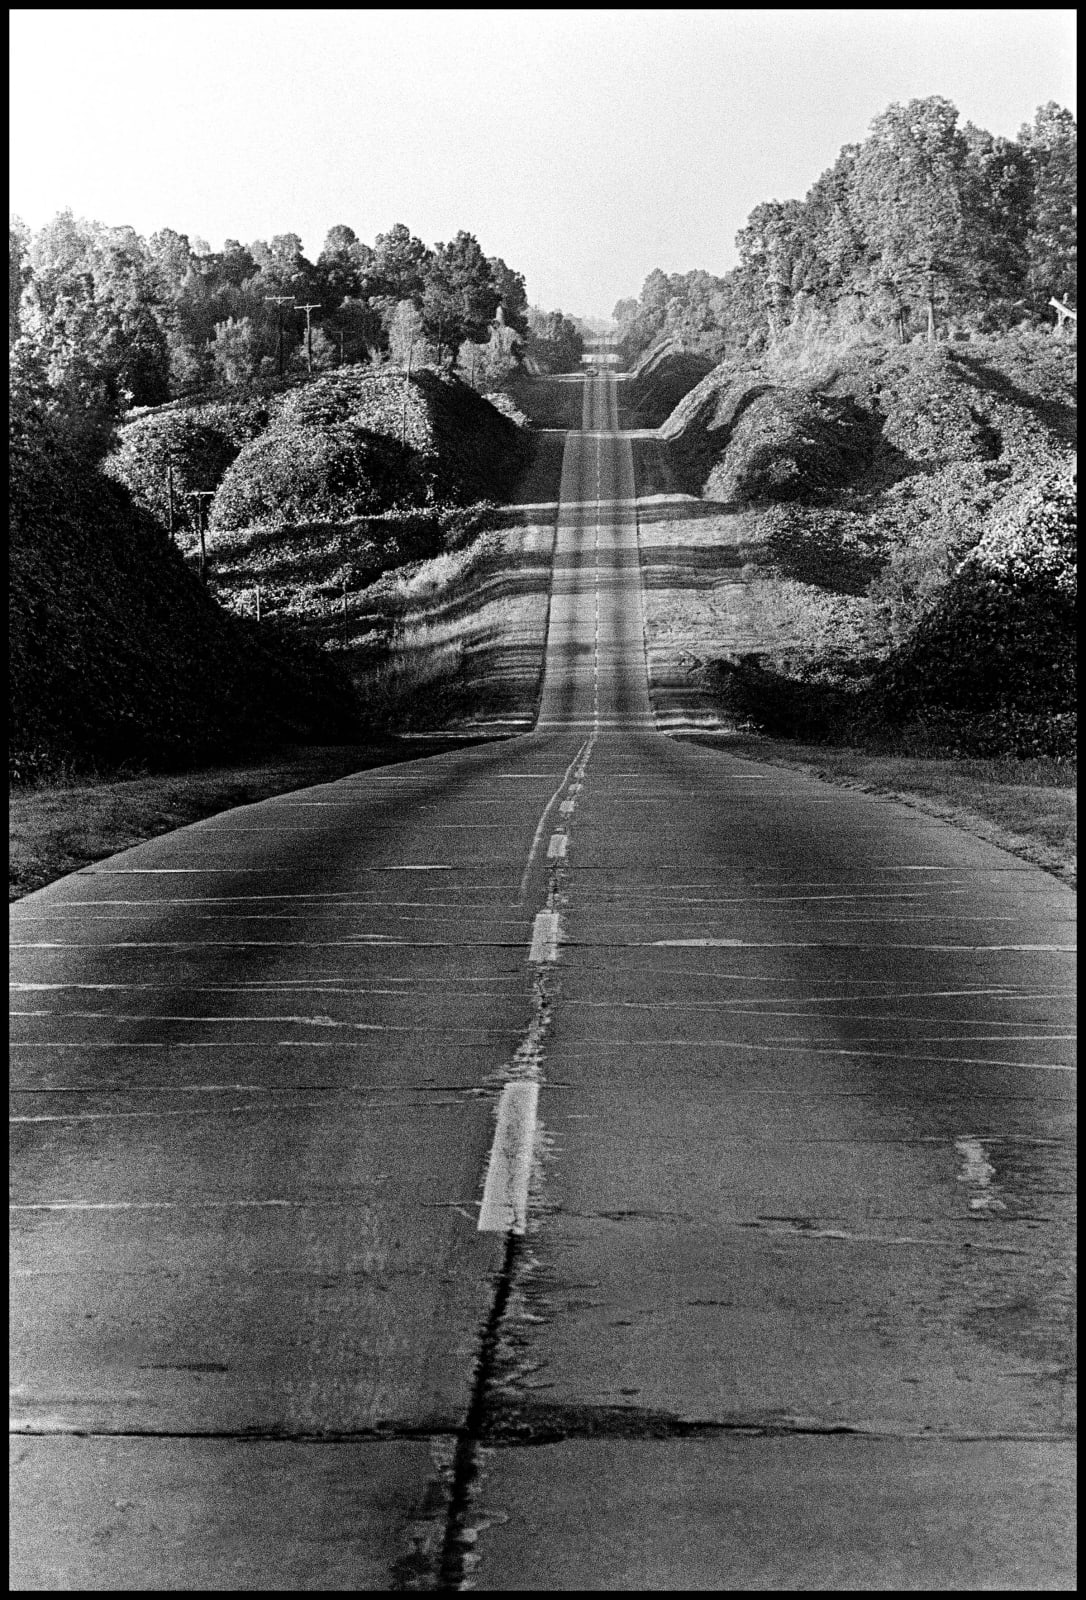 Danny Lyon, The Road to Yazoo City, 1964